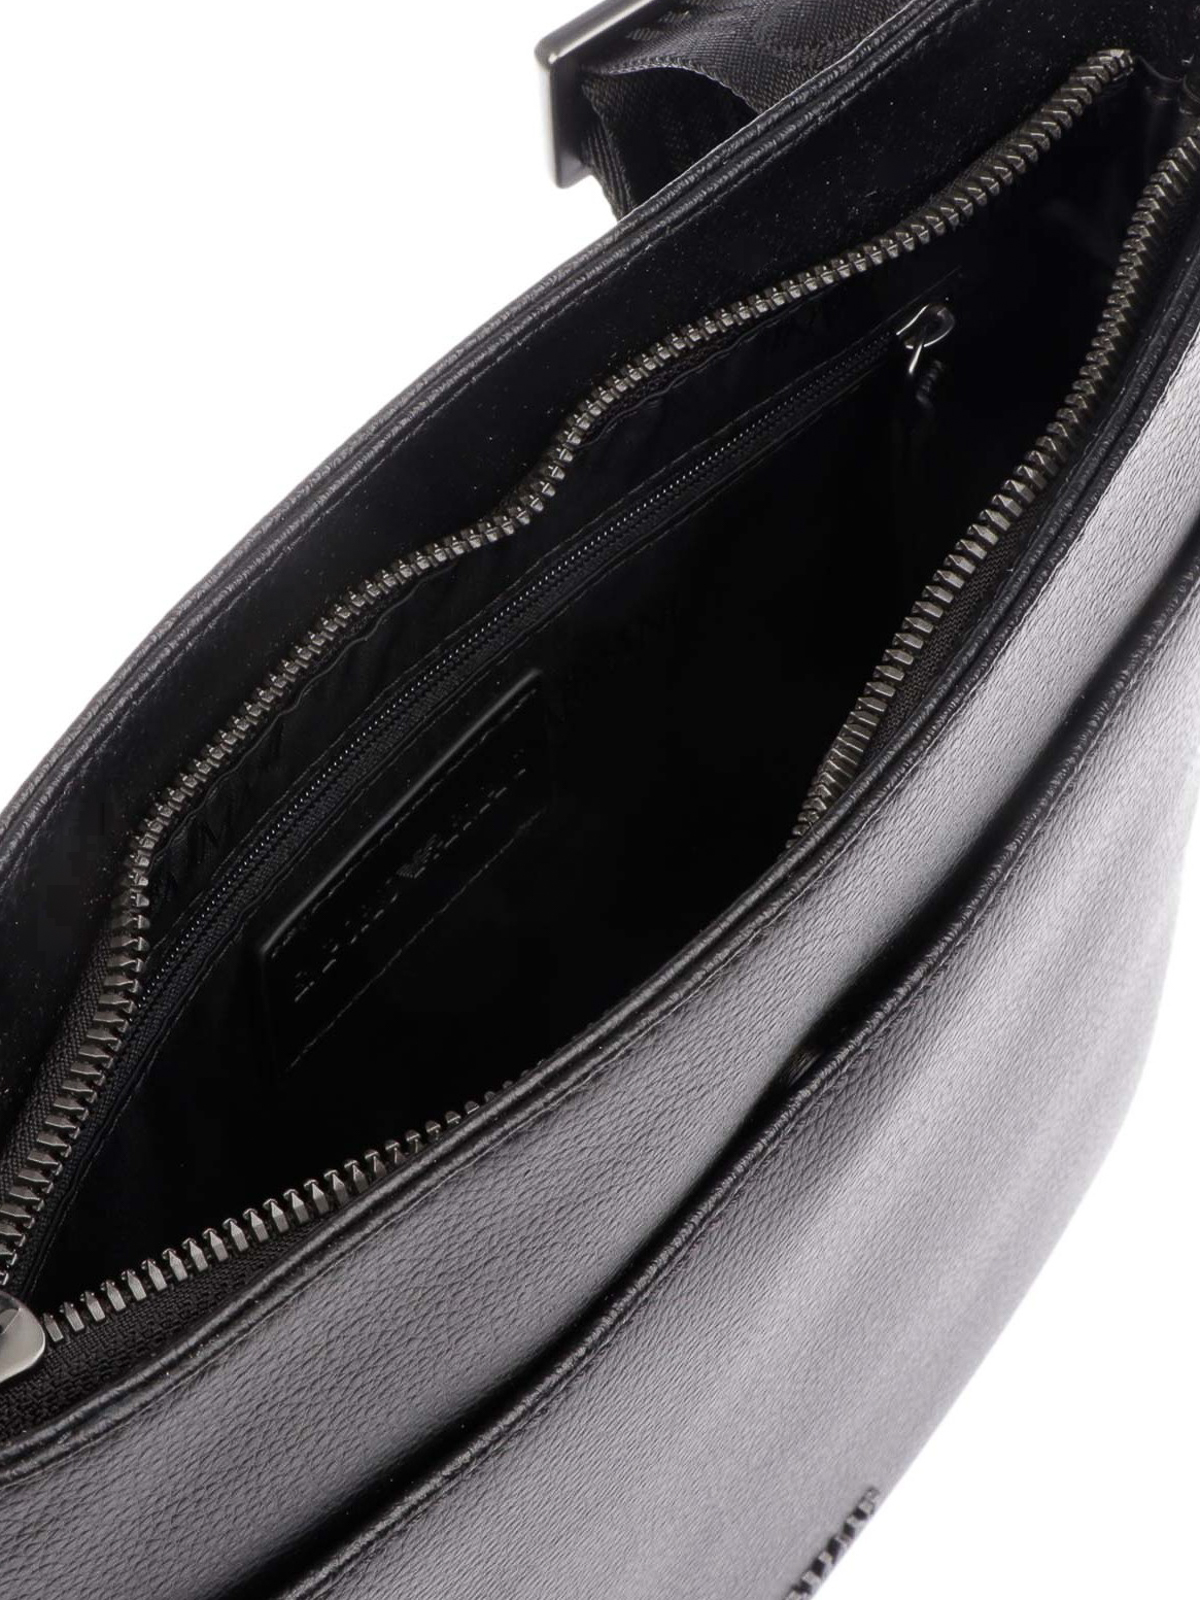 Emporio Armani | Bags | Emporio Armani Black Patent Quilted Leather Stud  Flap Chain Bag | Poshmark